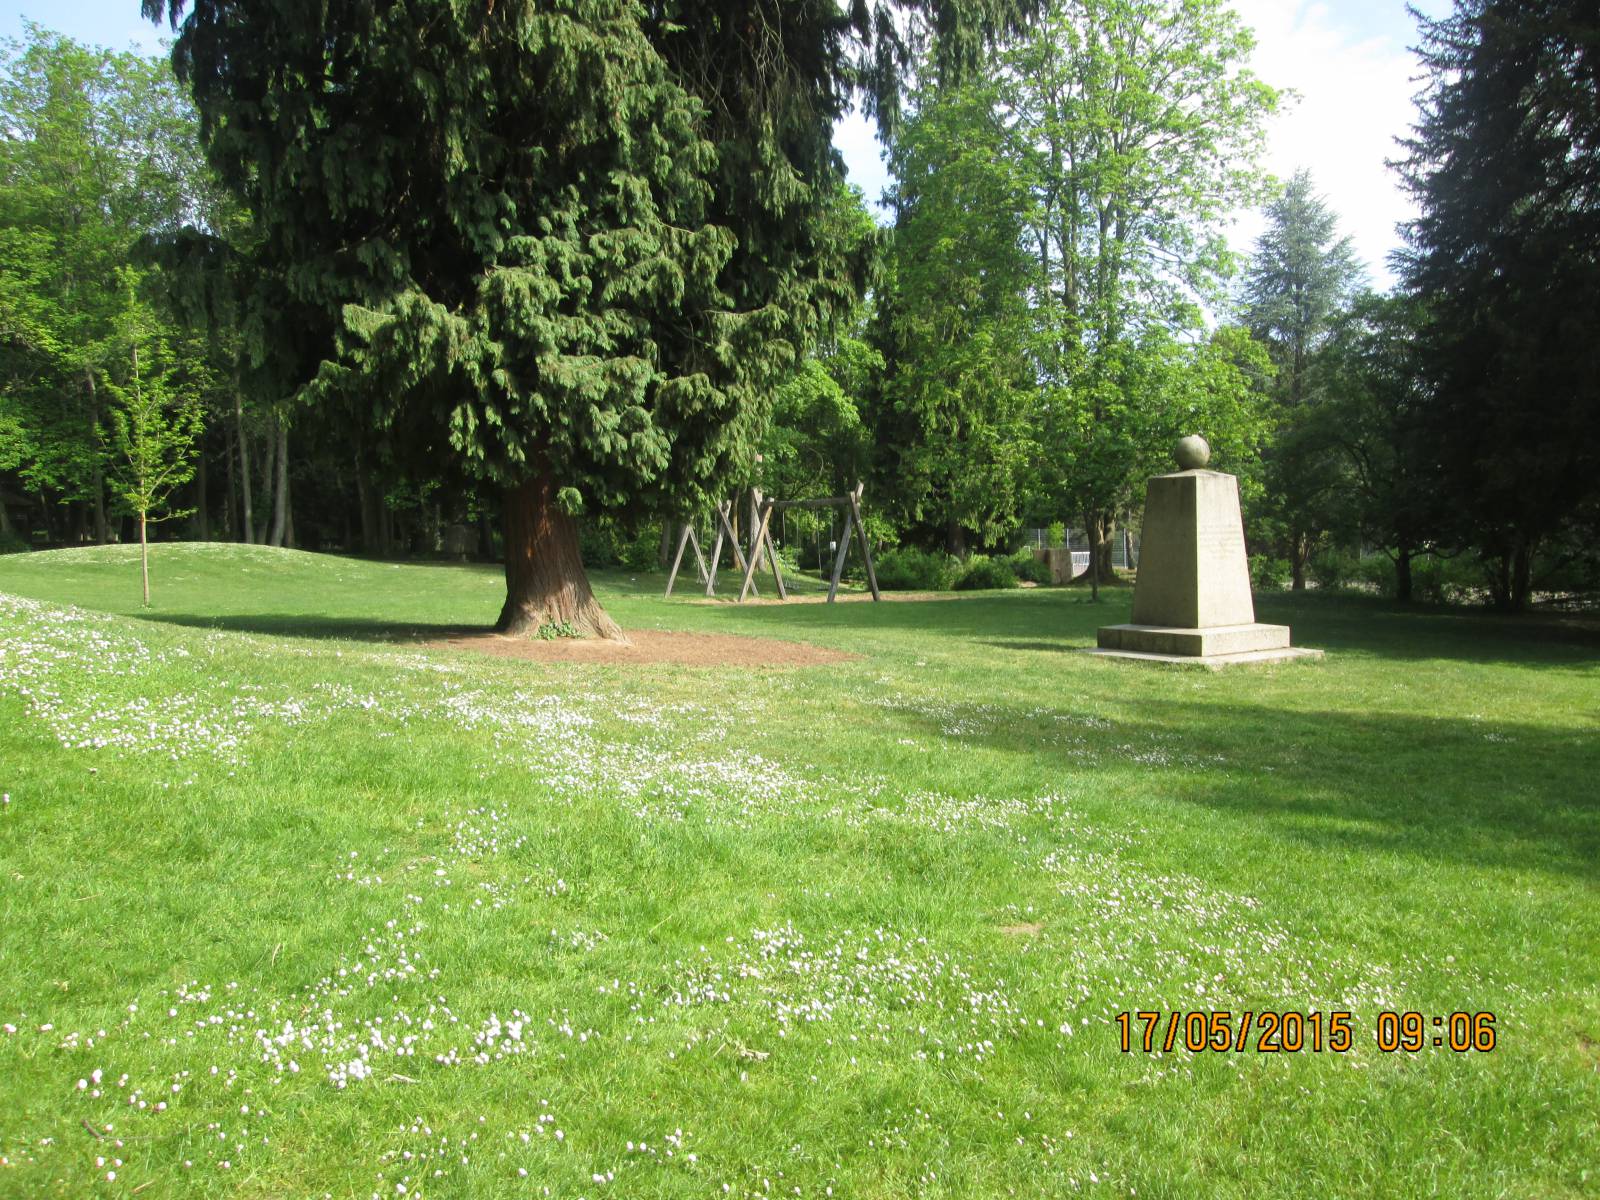 Spielplatz Alter Friedhof in Wiesbaden